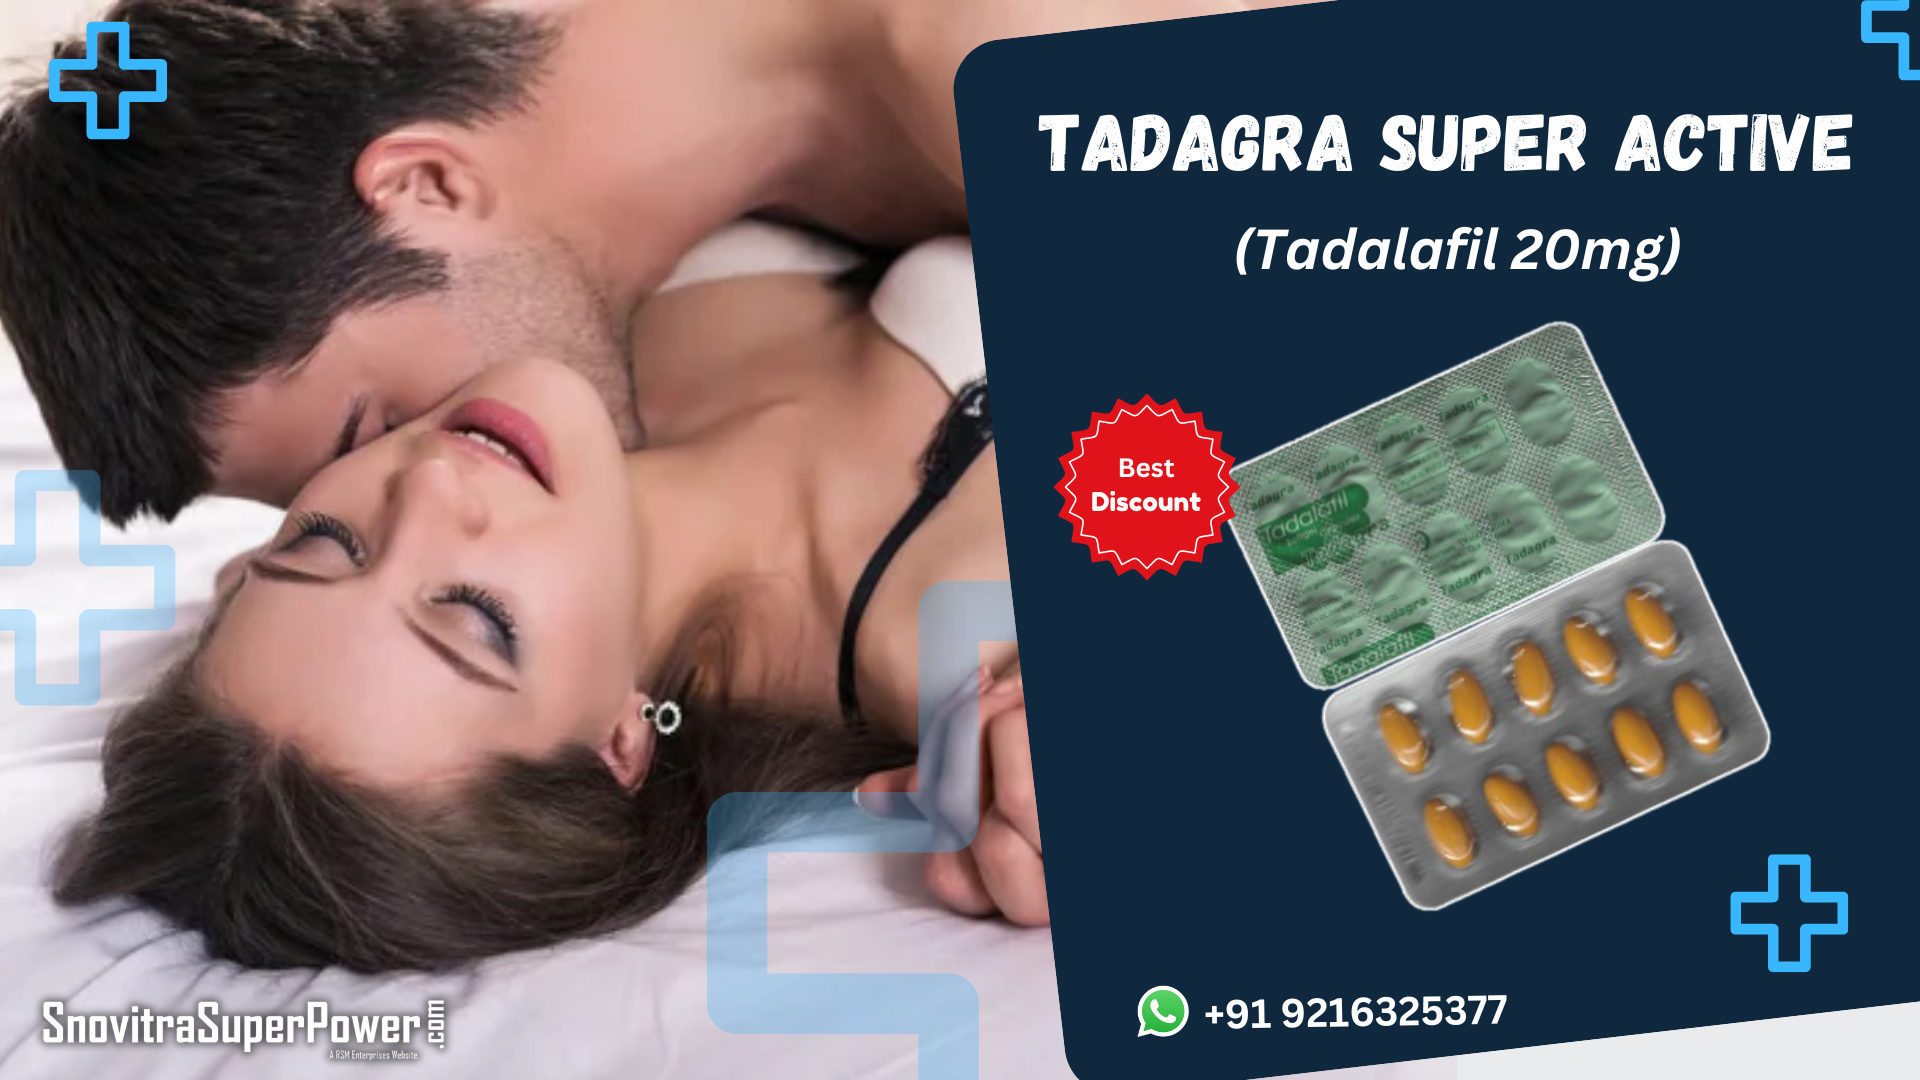 Tadagra Super Active: A Significant Medication to Fix Erection Failure